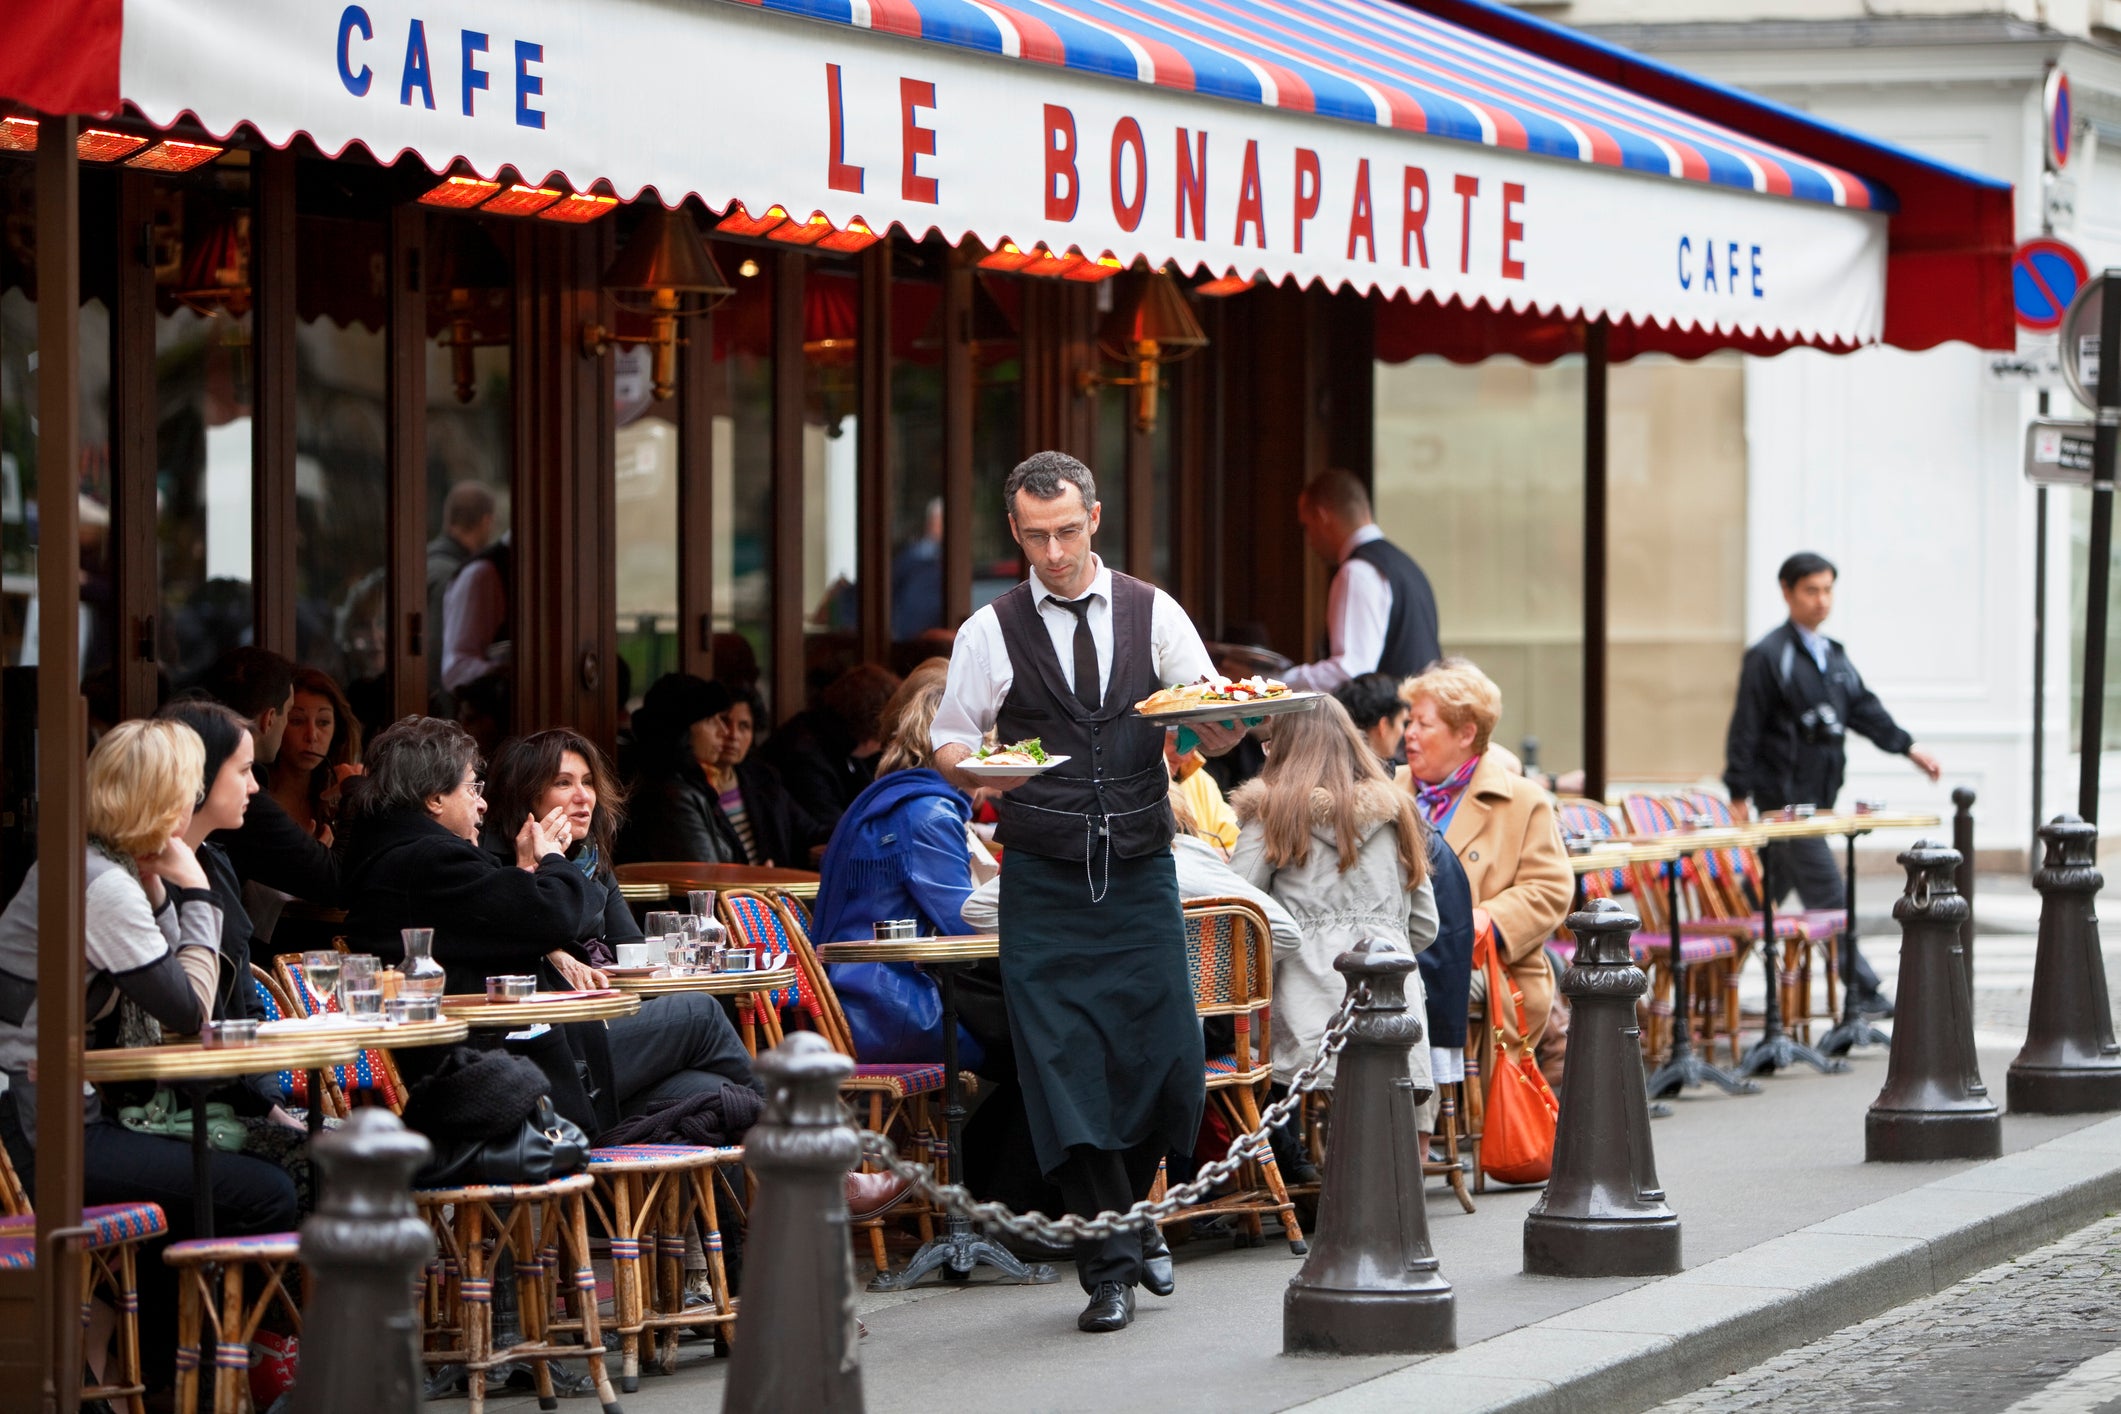 Saint Germain-des-Pres has numerous cafes, restaurants and jazz bars (Getty/iStock)